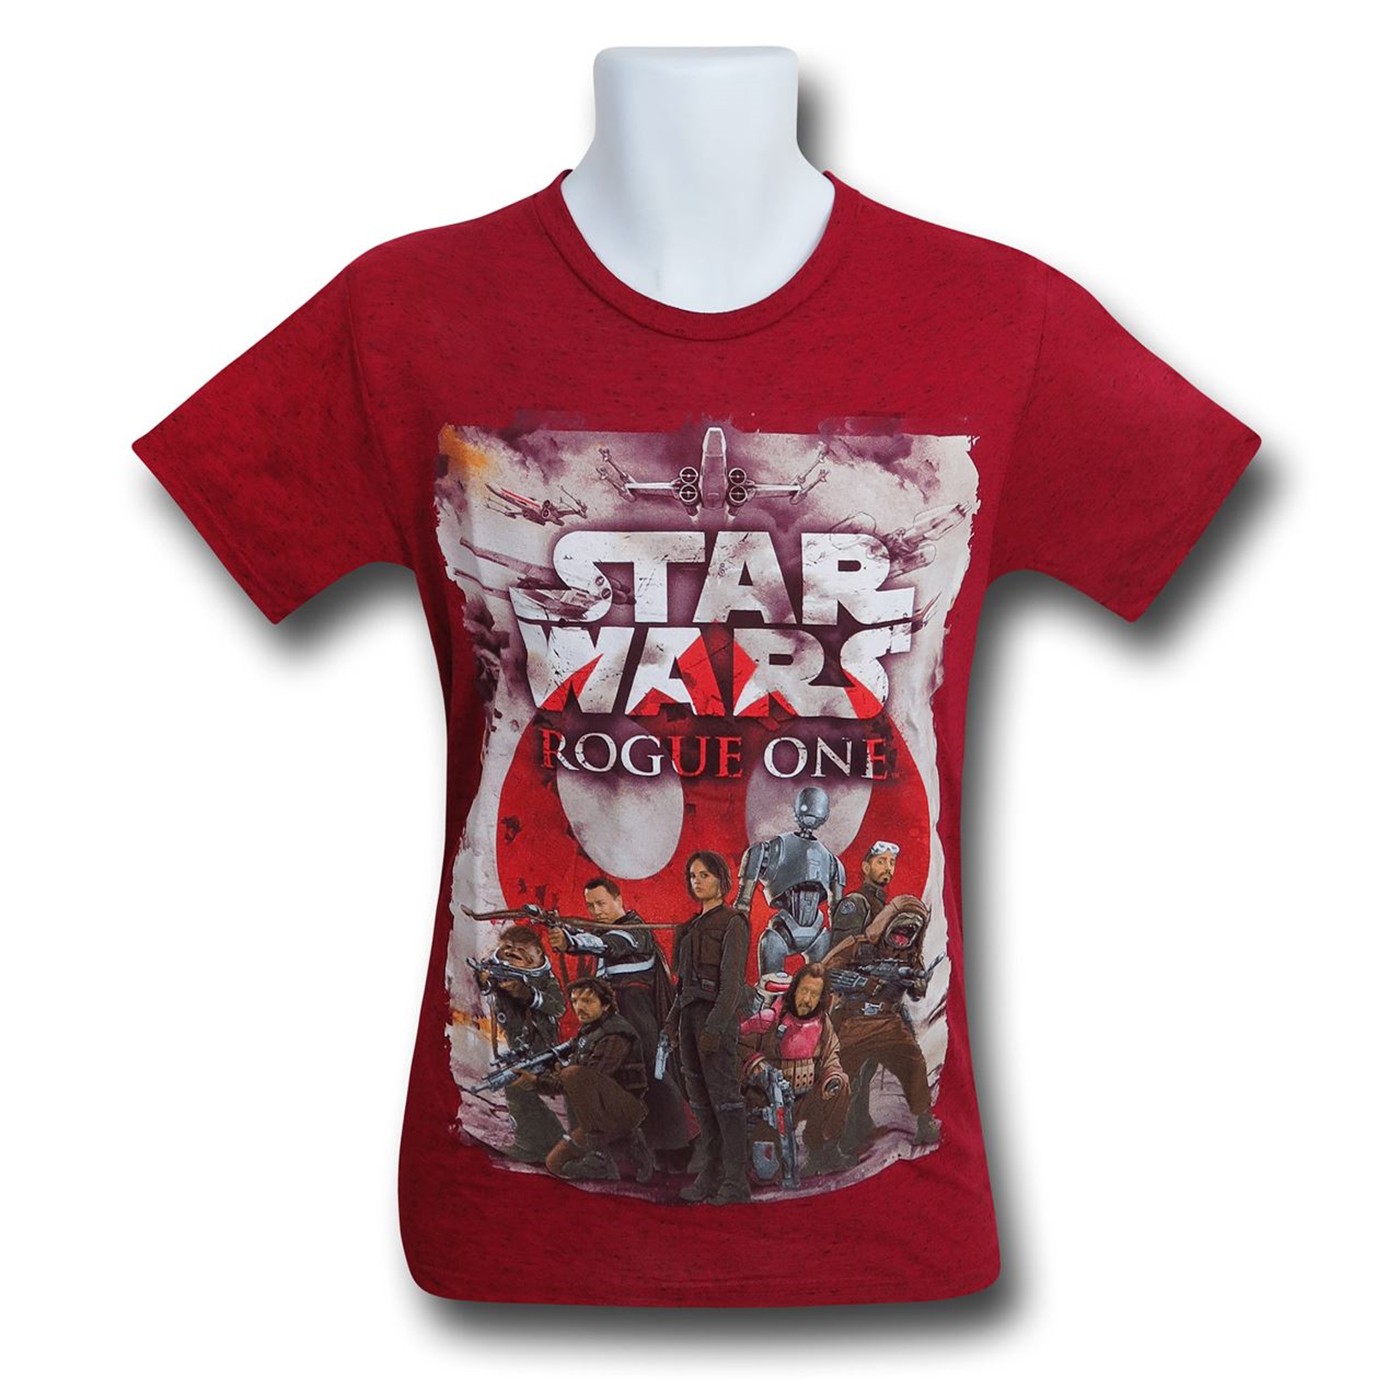 Star Wars Rogue One Team One Men's T-Shirt